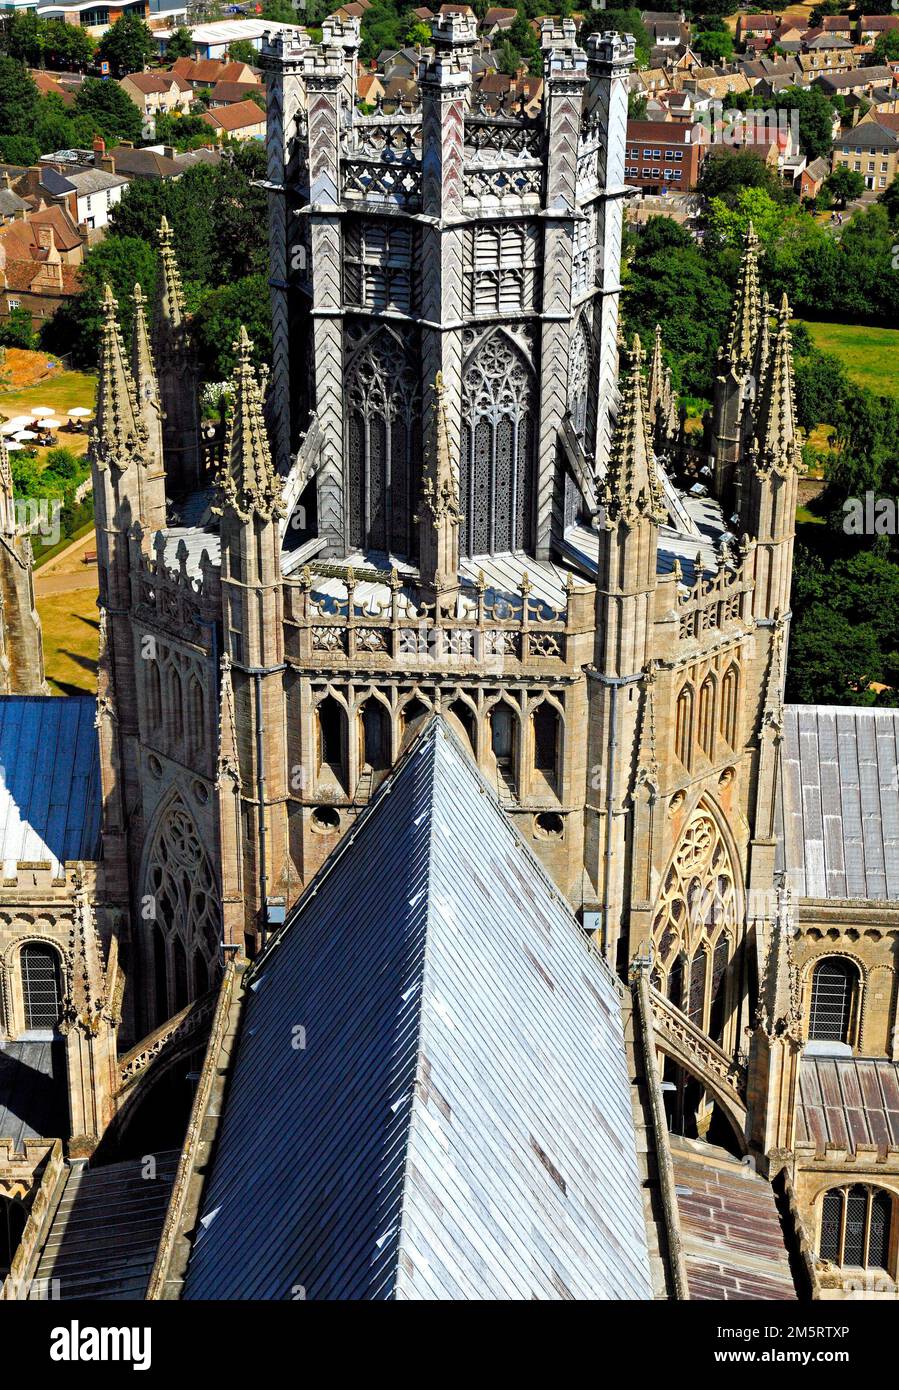 Ely Cathedral, Octagon and Lantern Towers, Ely, Cambridgeshire, England, UK Stock Photo